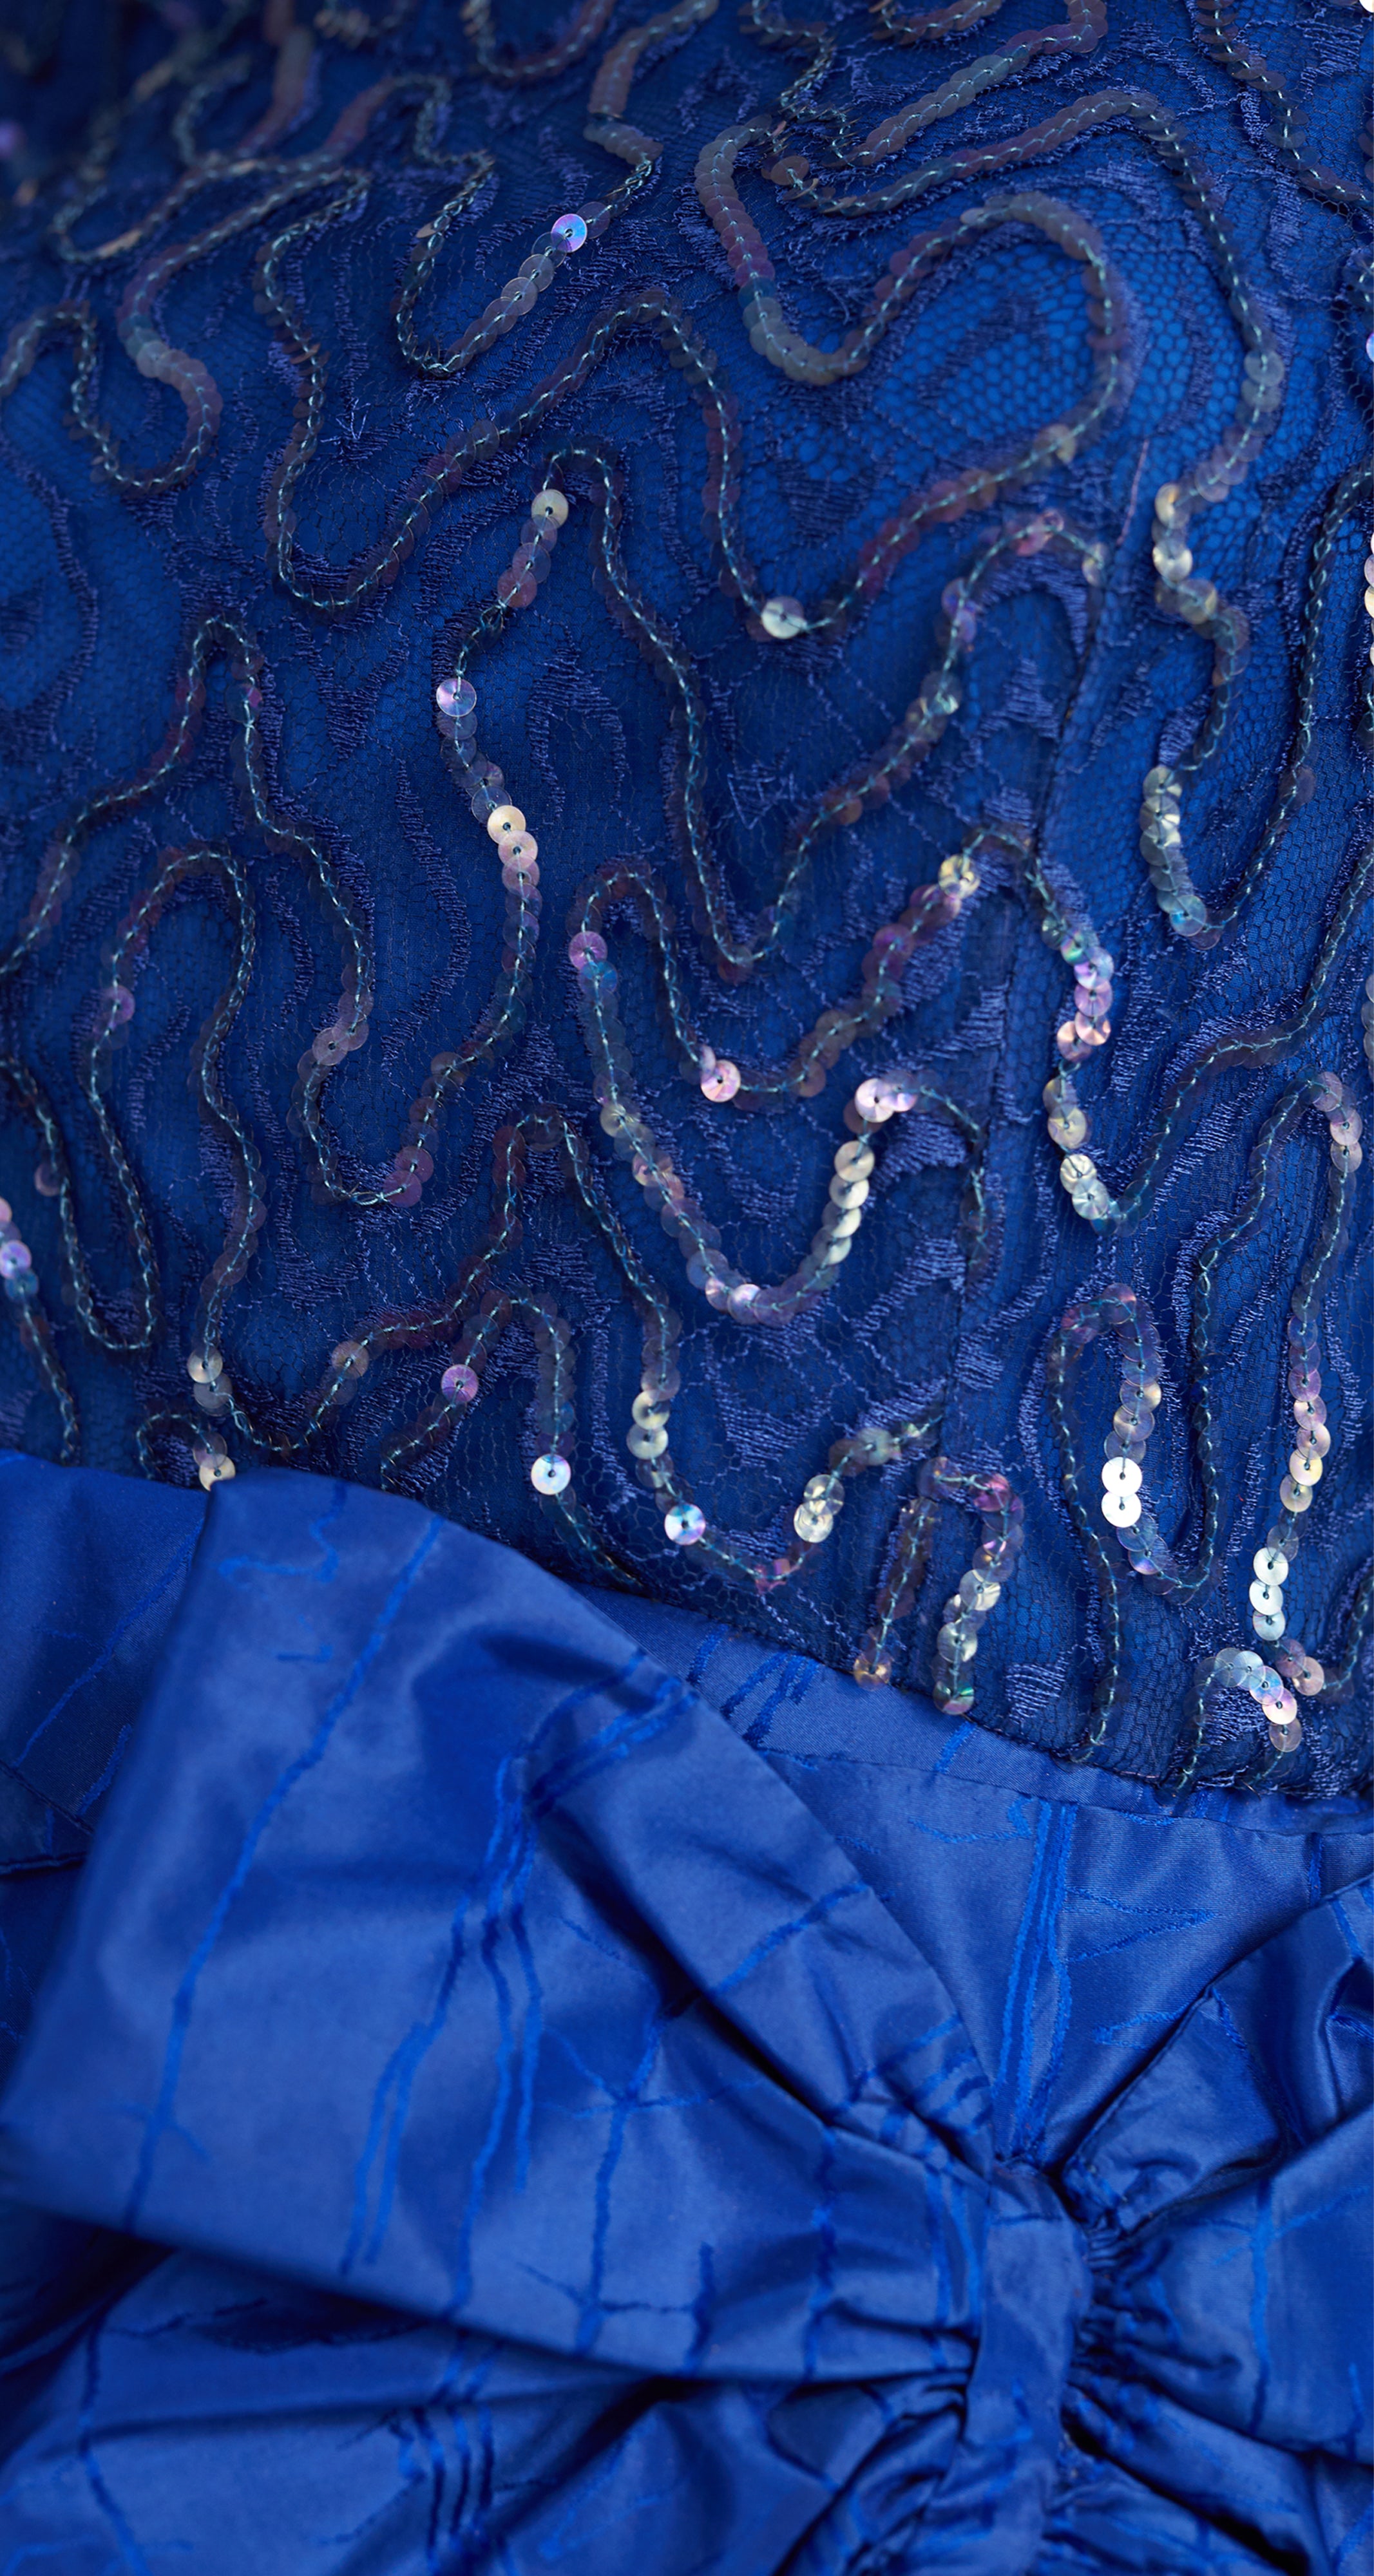 1980s Blue Sequin & Silk Taffeta Bow Cocktail Dress